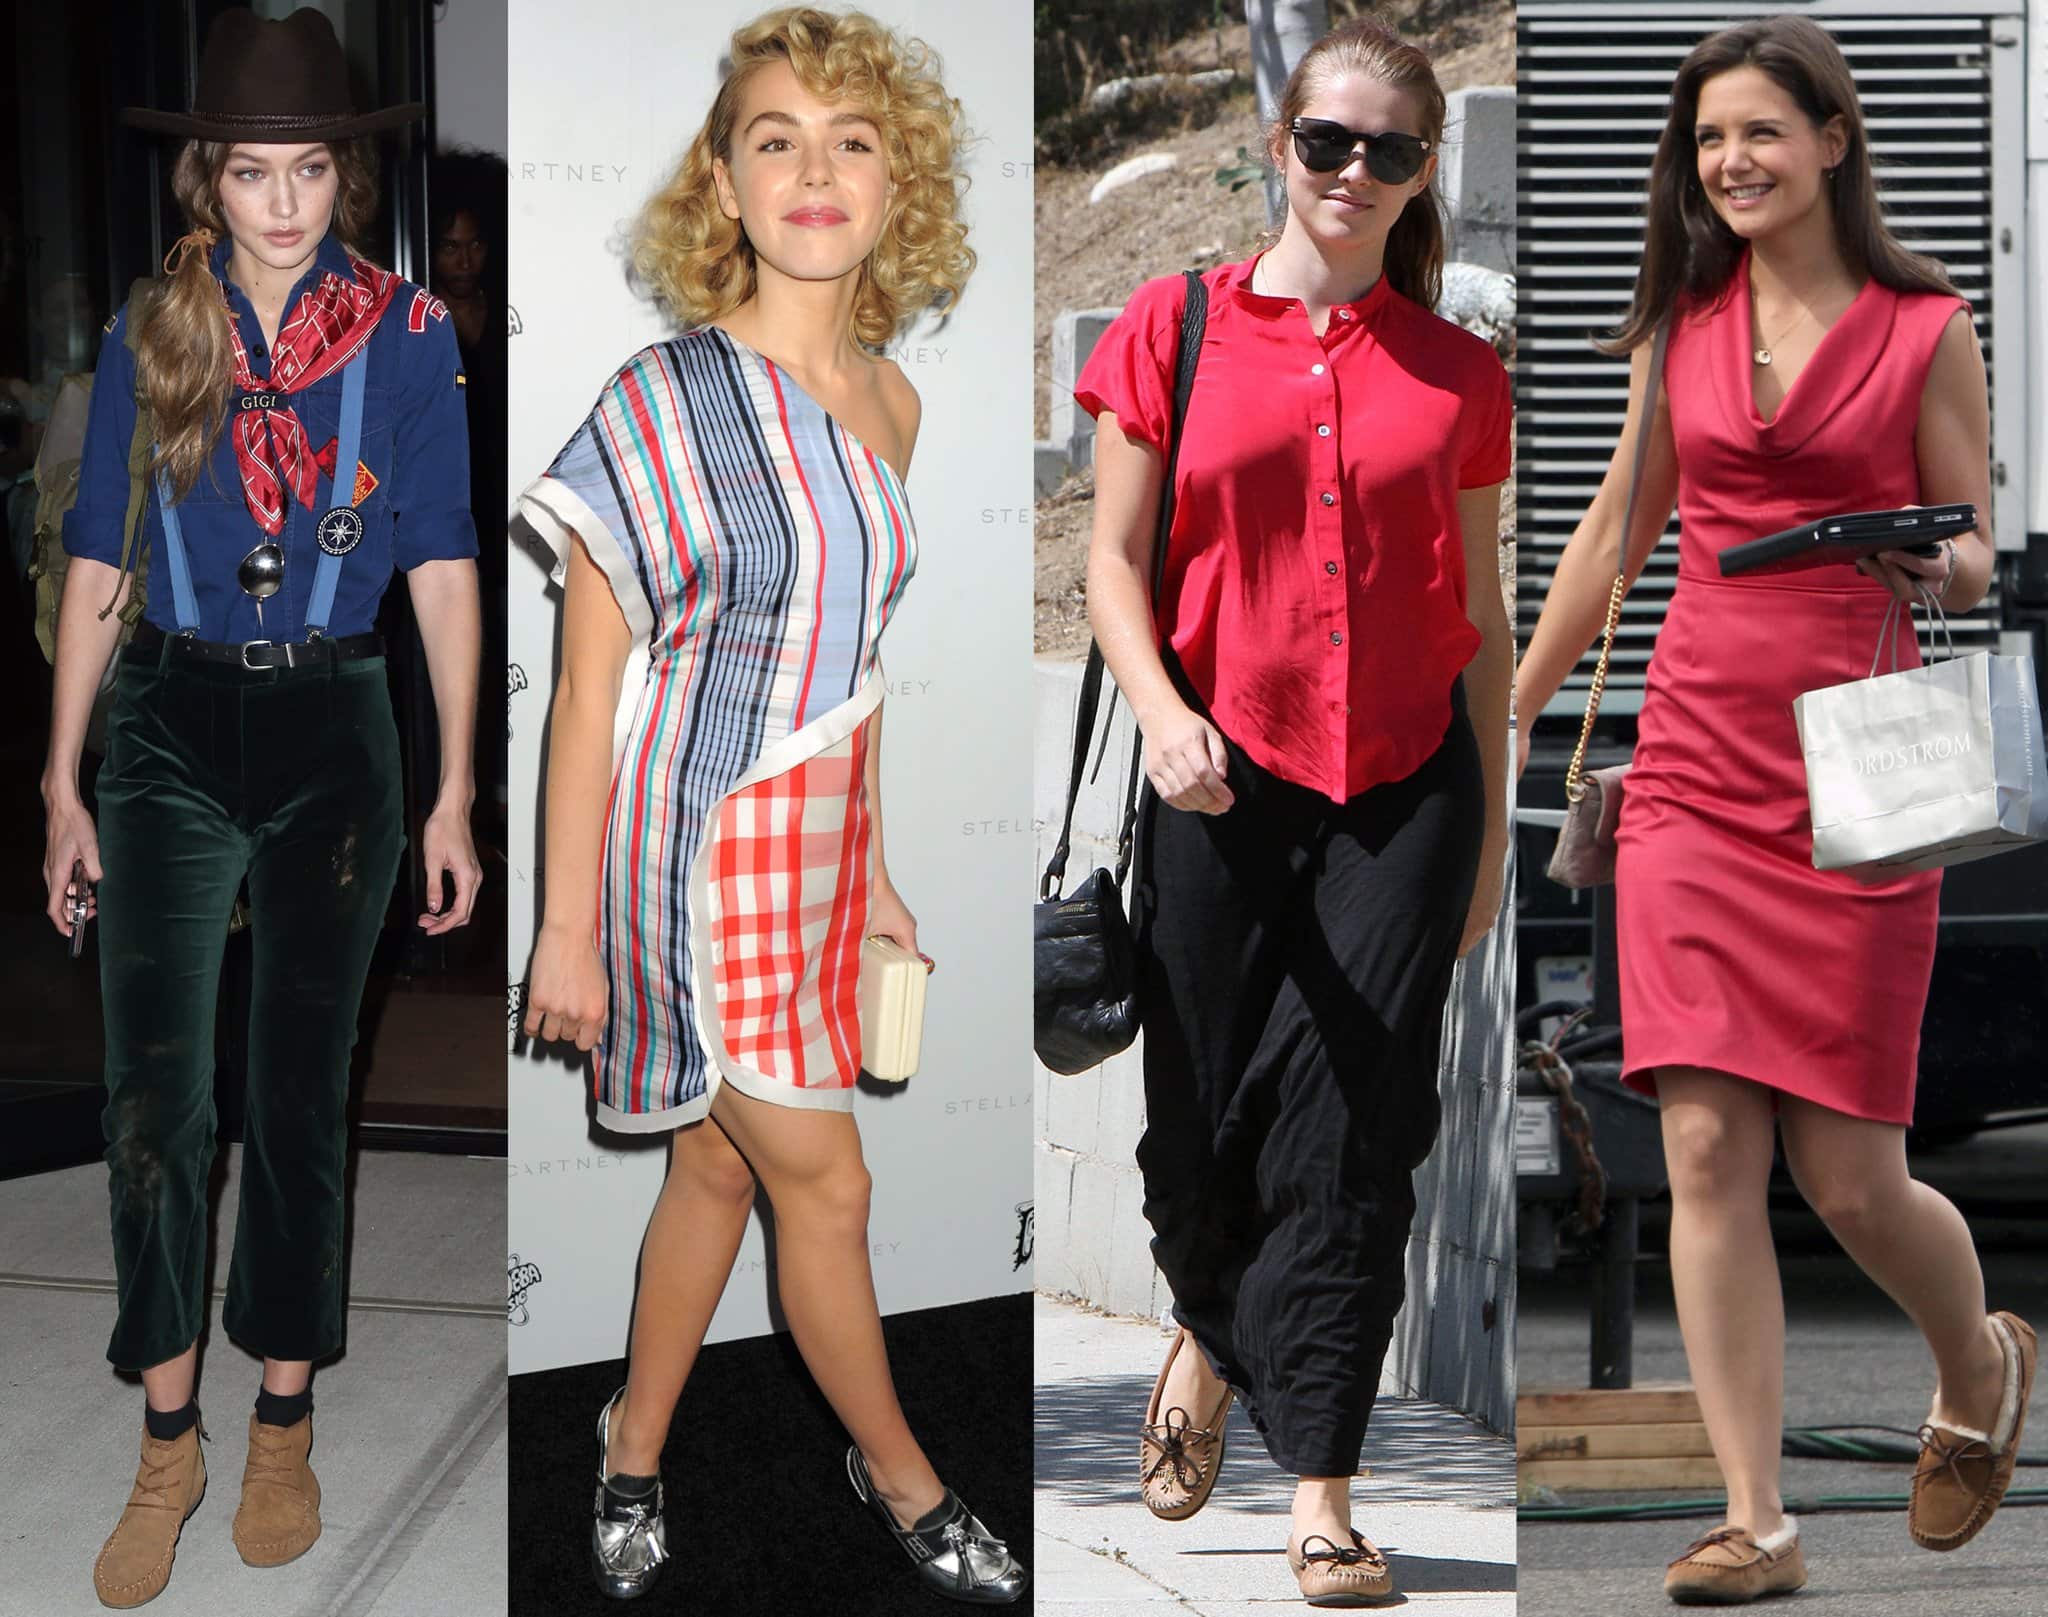 Gigi Hadid, Kiernan Shipka, Teresa Palmer, and Katie Holmes show how to wear moccasins